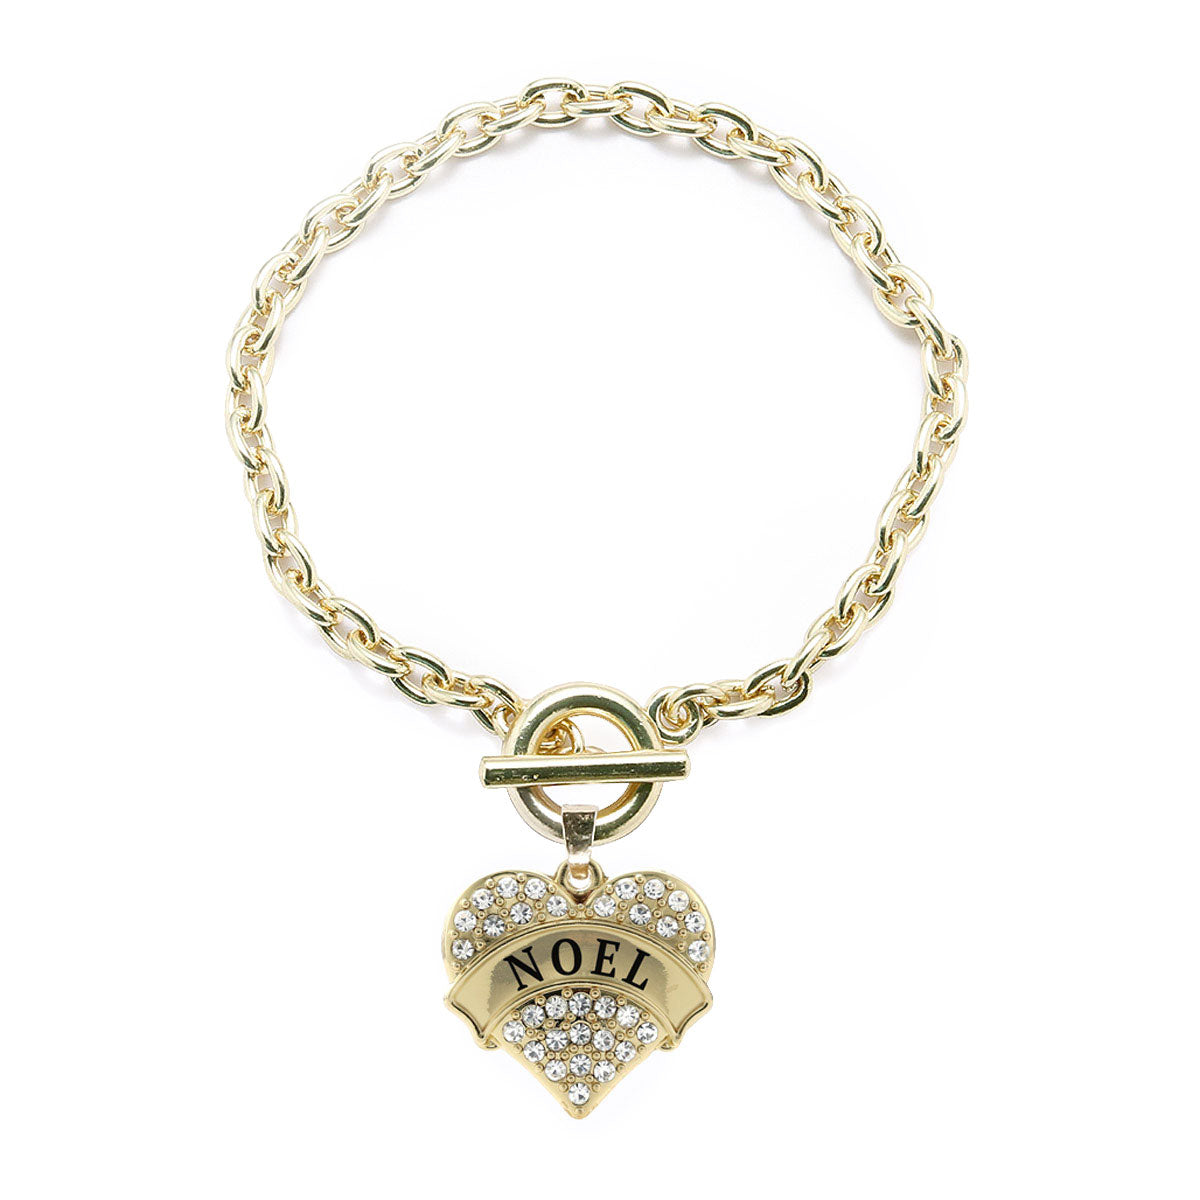 Gold Noel Pave Heart Charm Toggle Bracelet